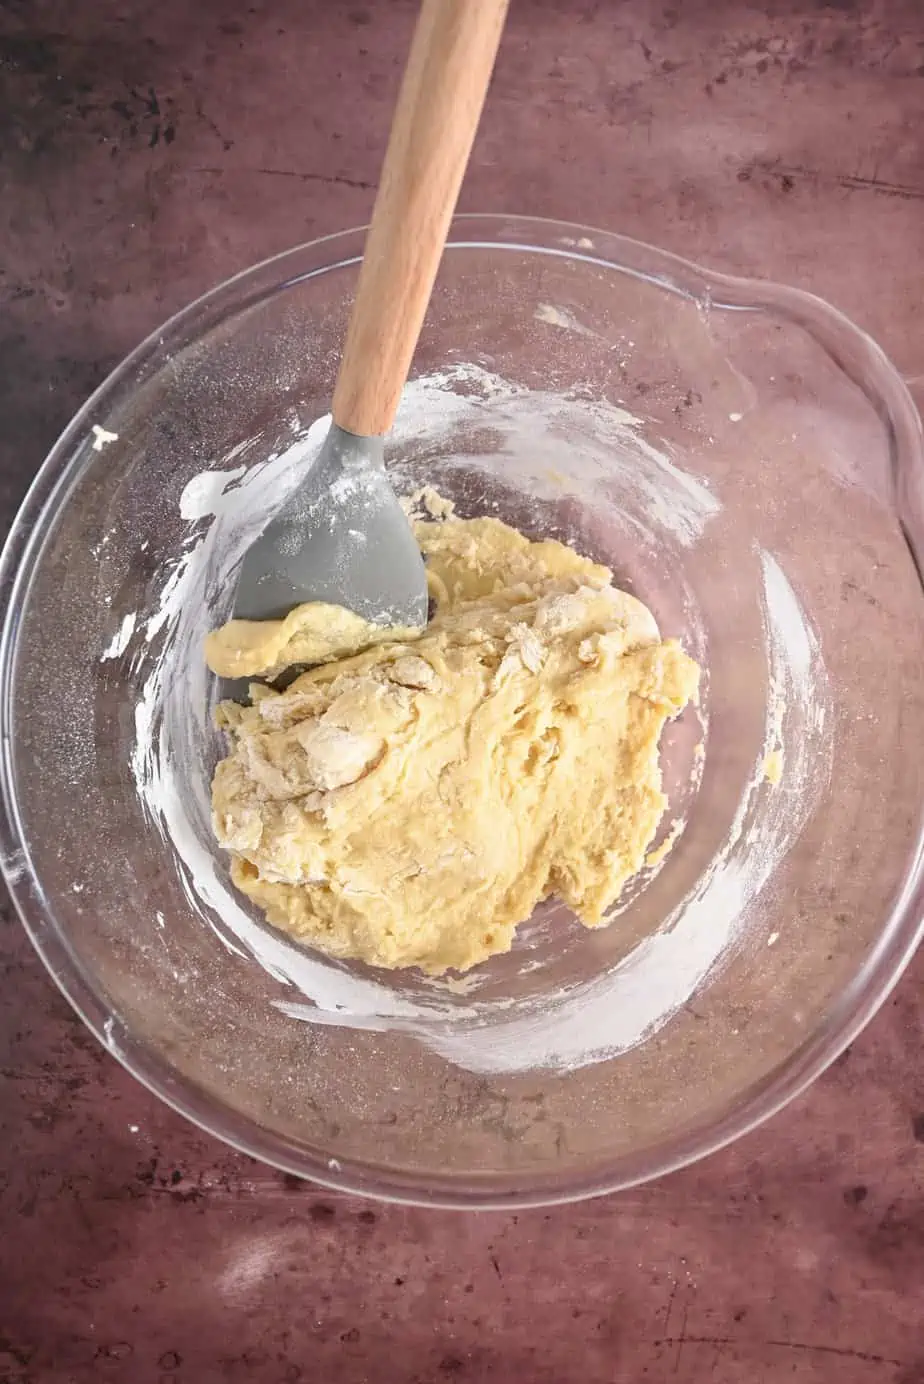 Spatula stirring pan de muerto dough in a glass bowl.